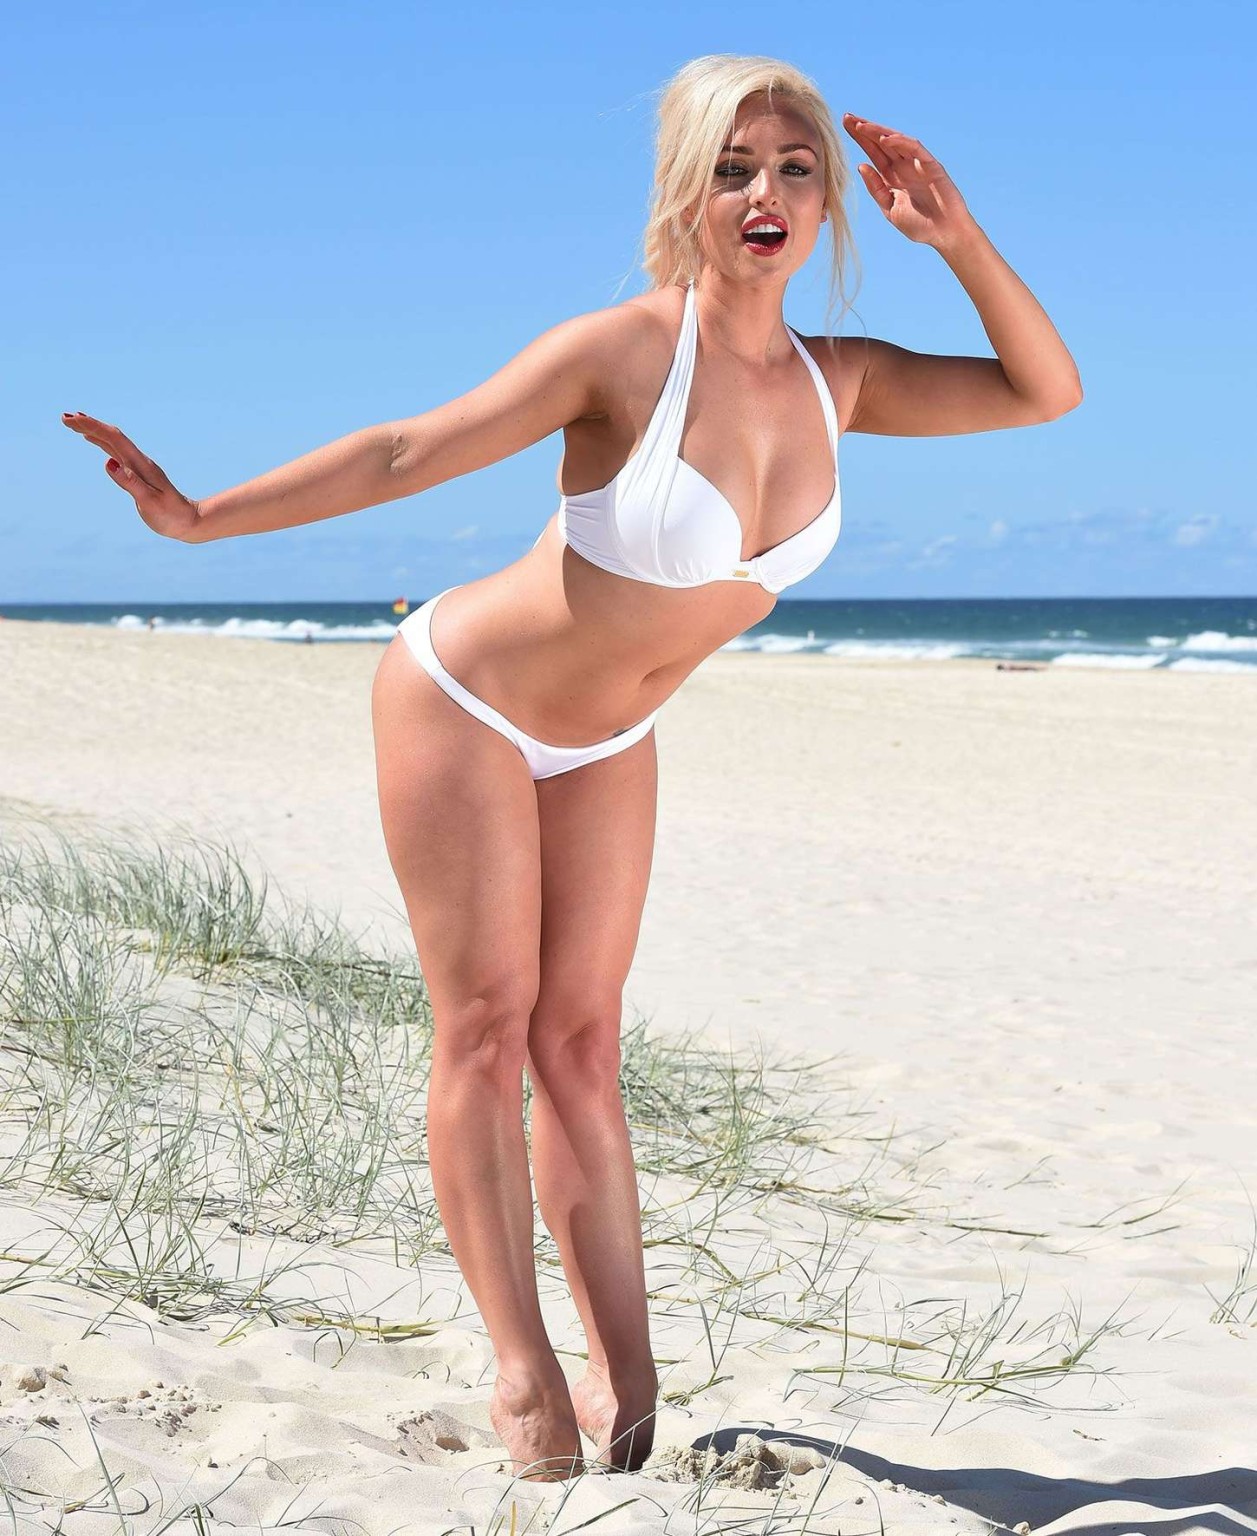 Jorgie porter enseñando las tetas y el culo en bikini blanco
 #75149977